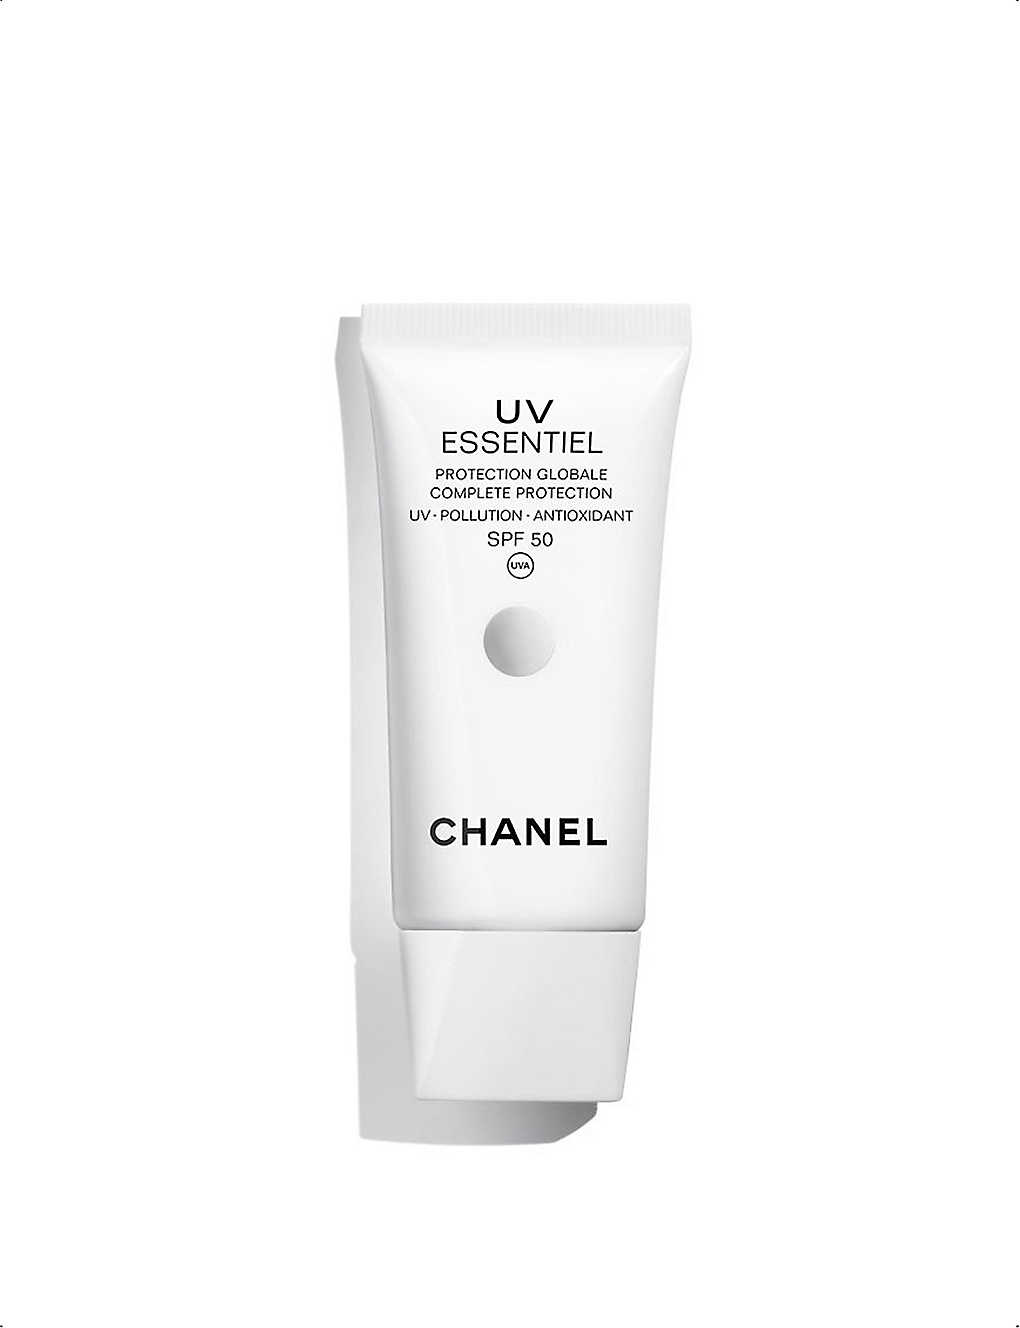 Chanel Uv Essentiel Complete Protection Antioxidant Spf50